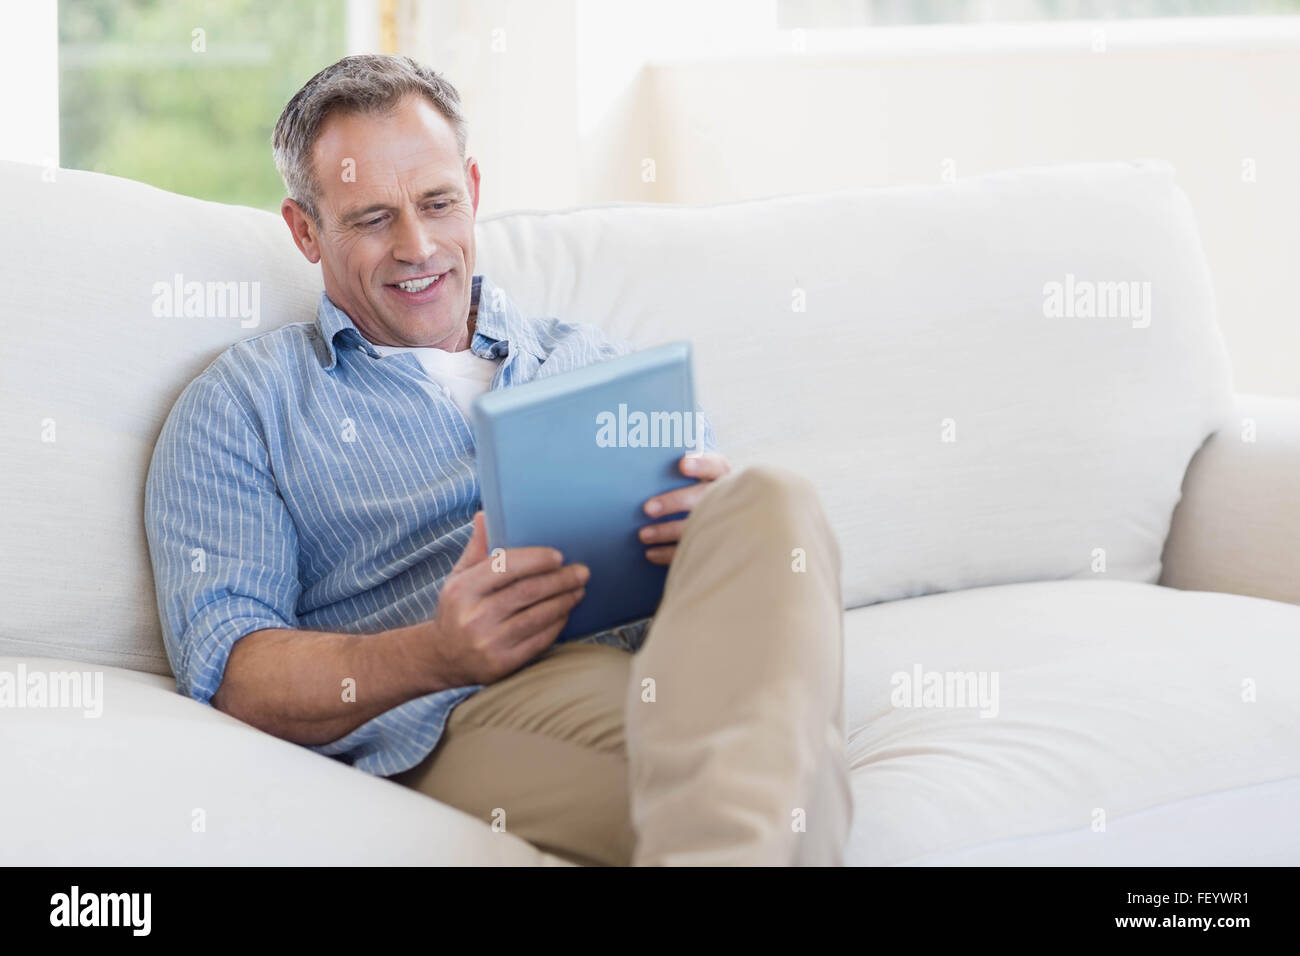 Happy man using tablet computer Stock Photo